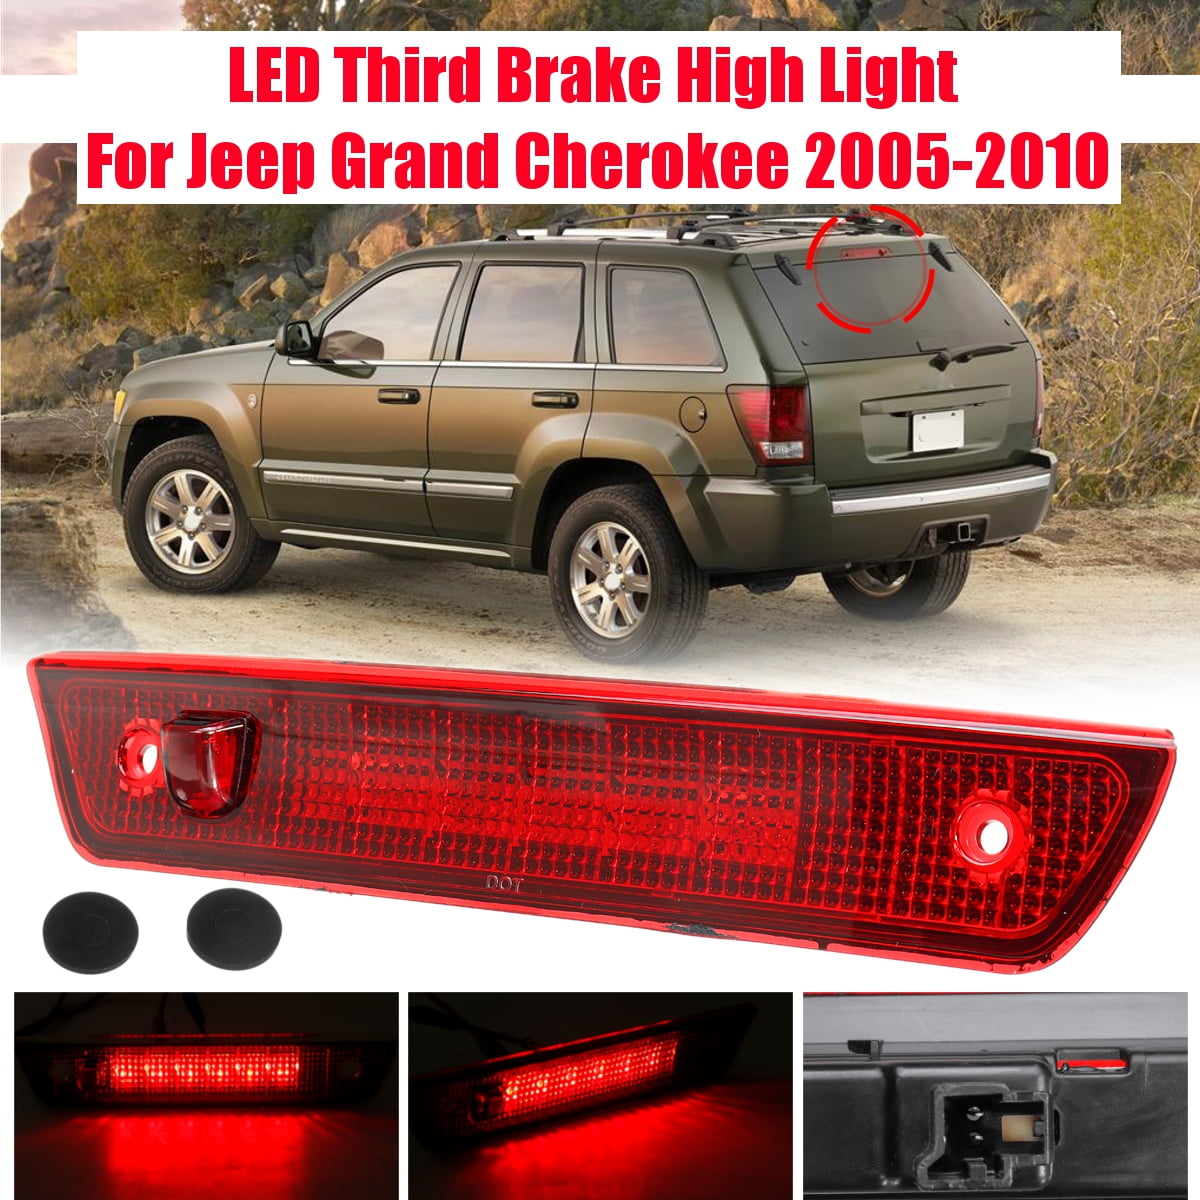 1 Pcs Rear LED Third Brake High Mount Stop Light For Jeep